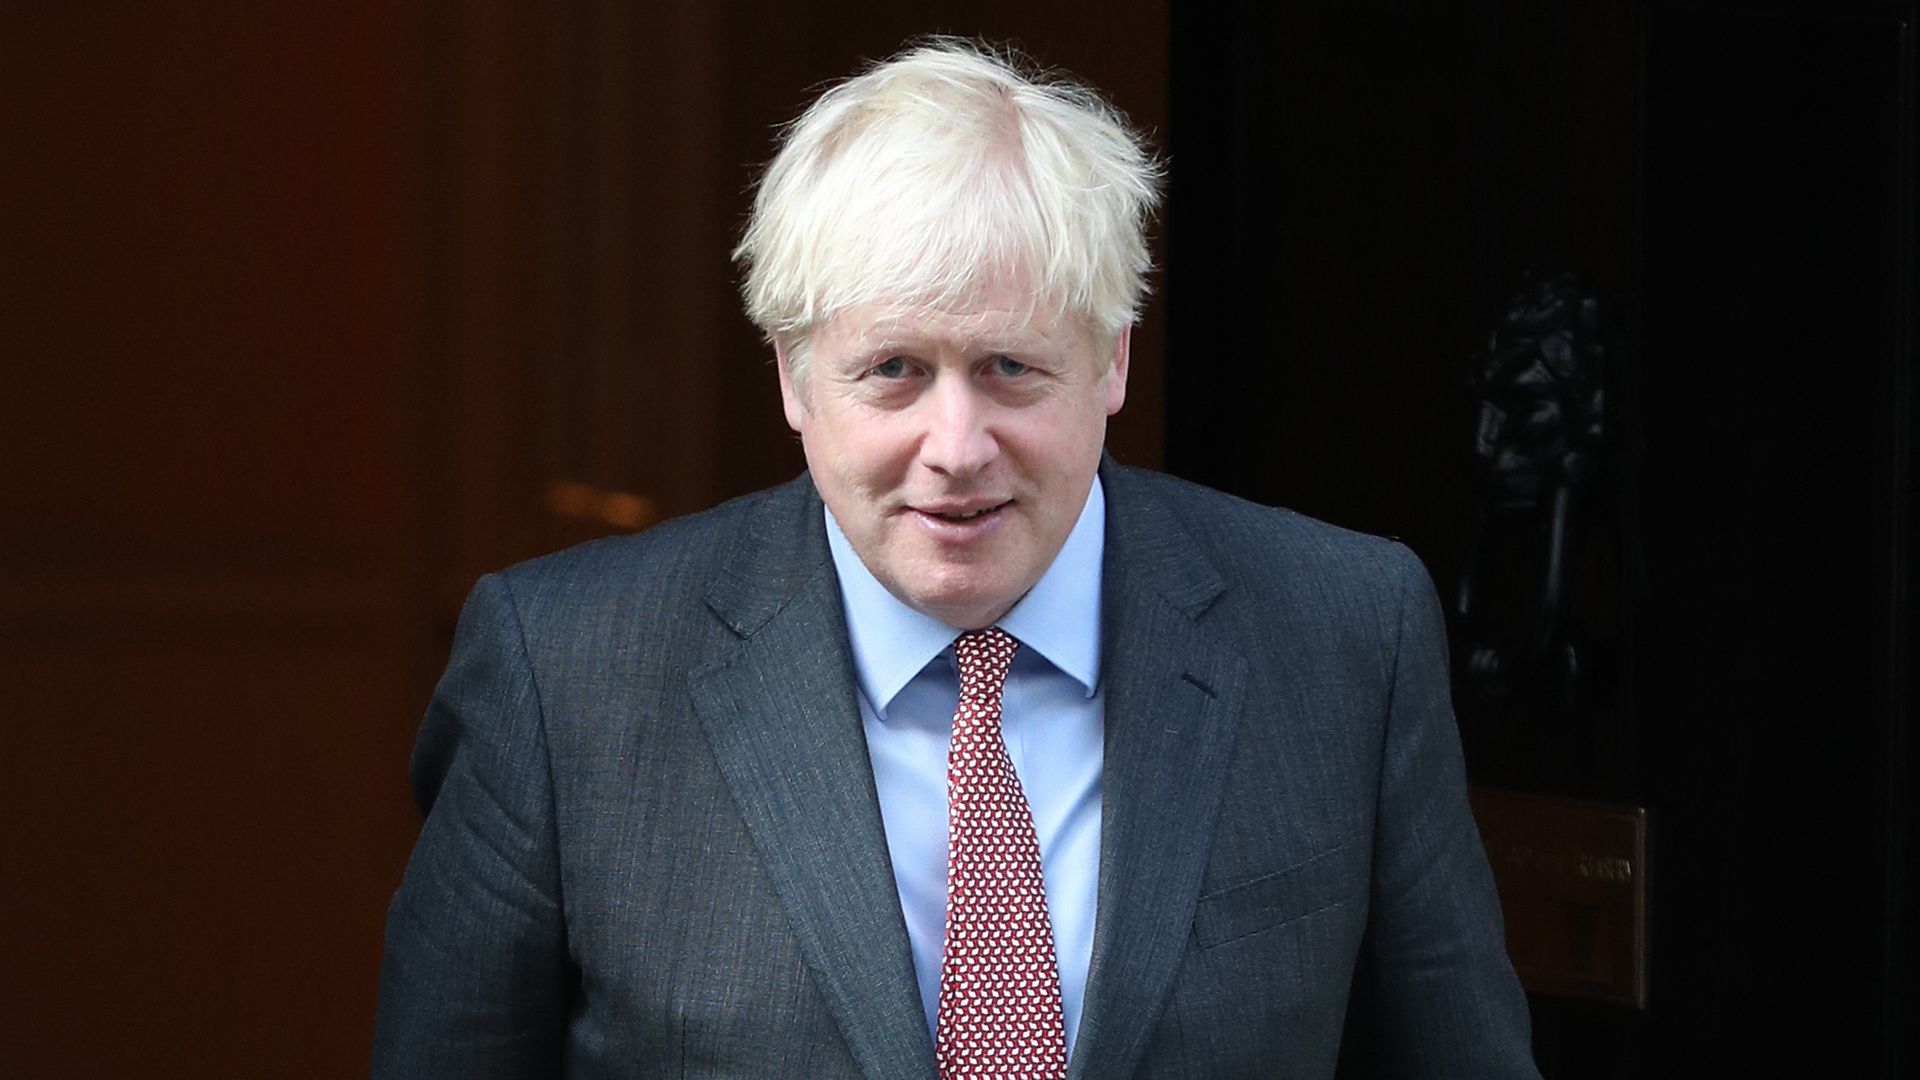 Prime minister Boris Johnson leaves 10 Downing Street, Westminster, London. - Credit: PA